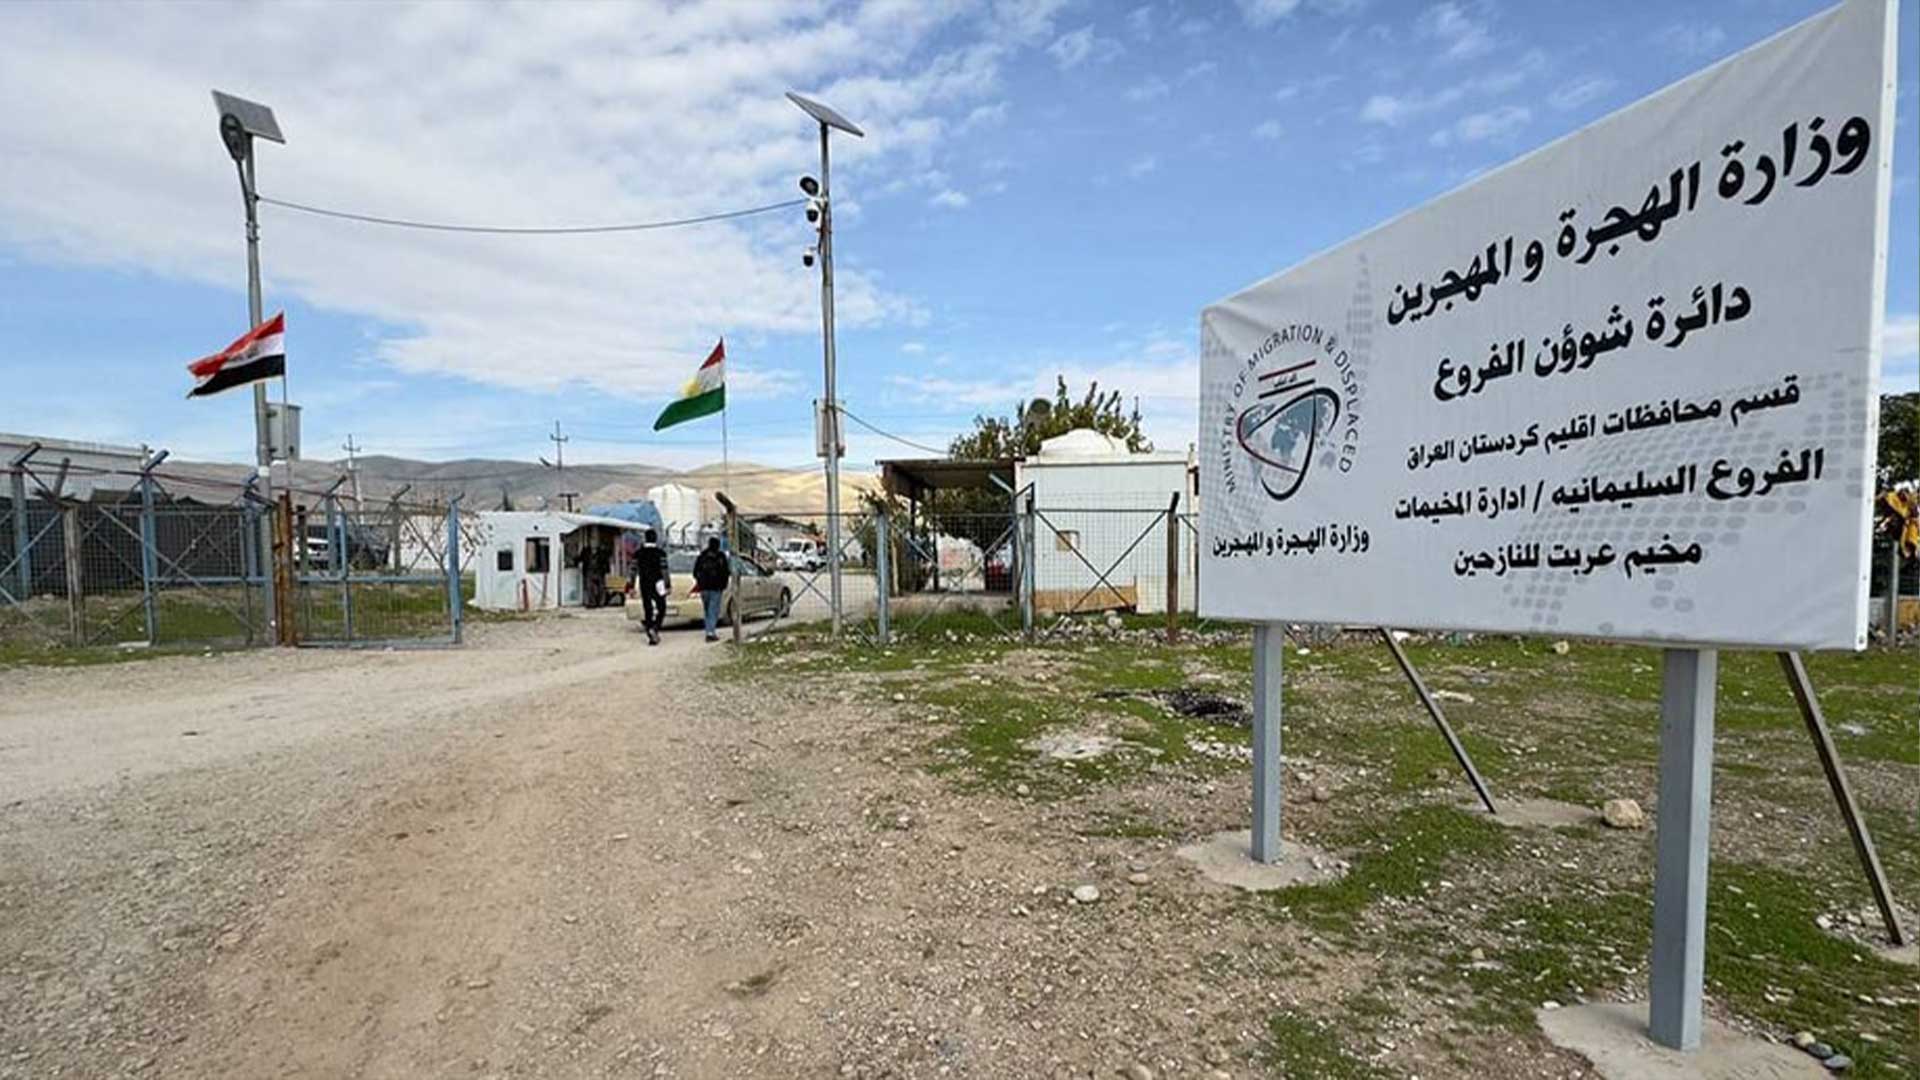 An IDP camp